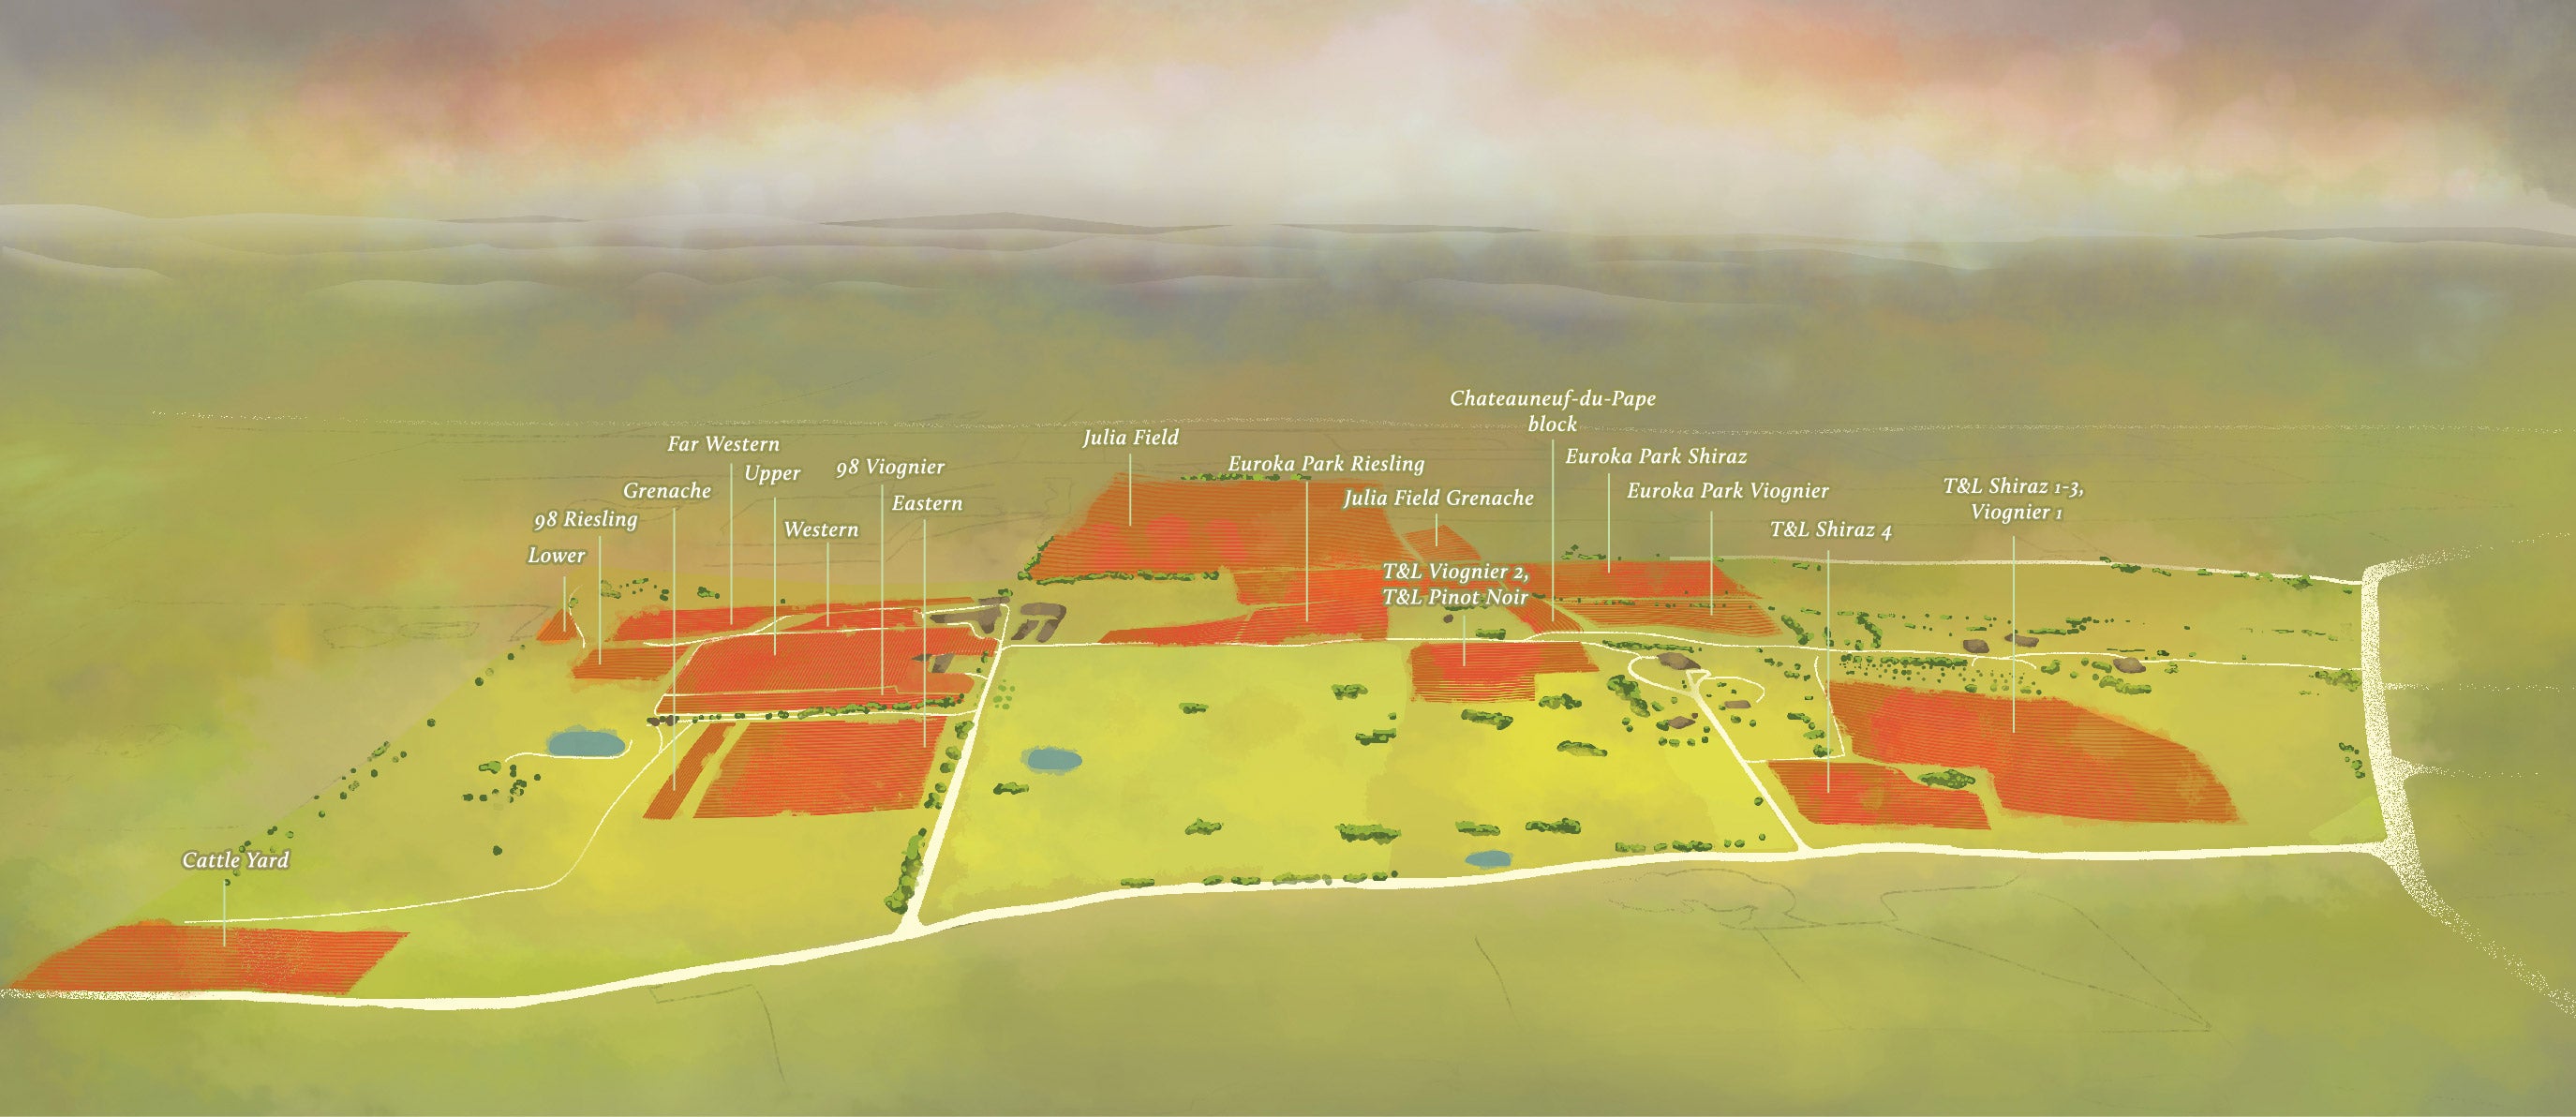 Illustrated map of Clonakilla vineyards